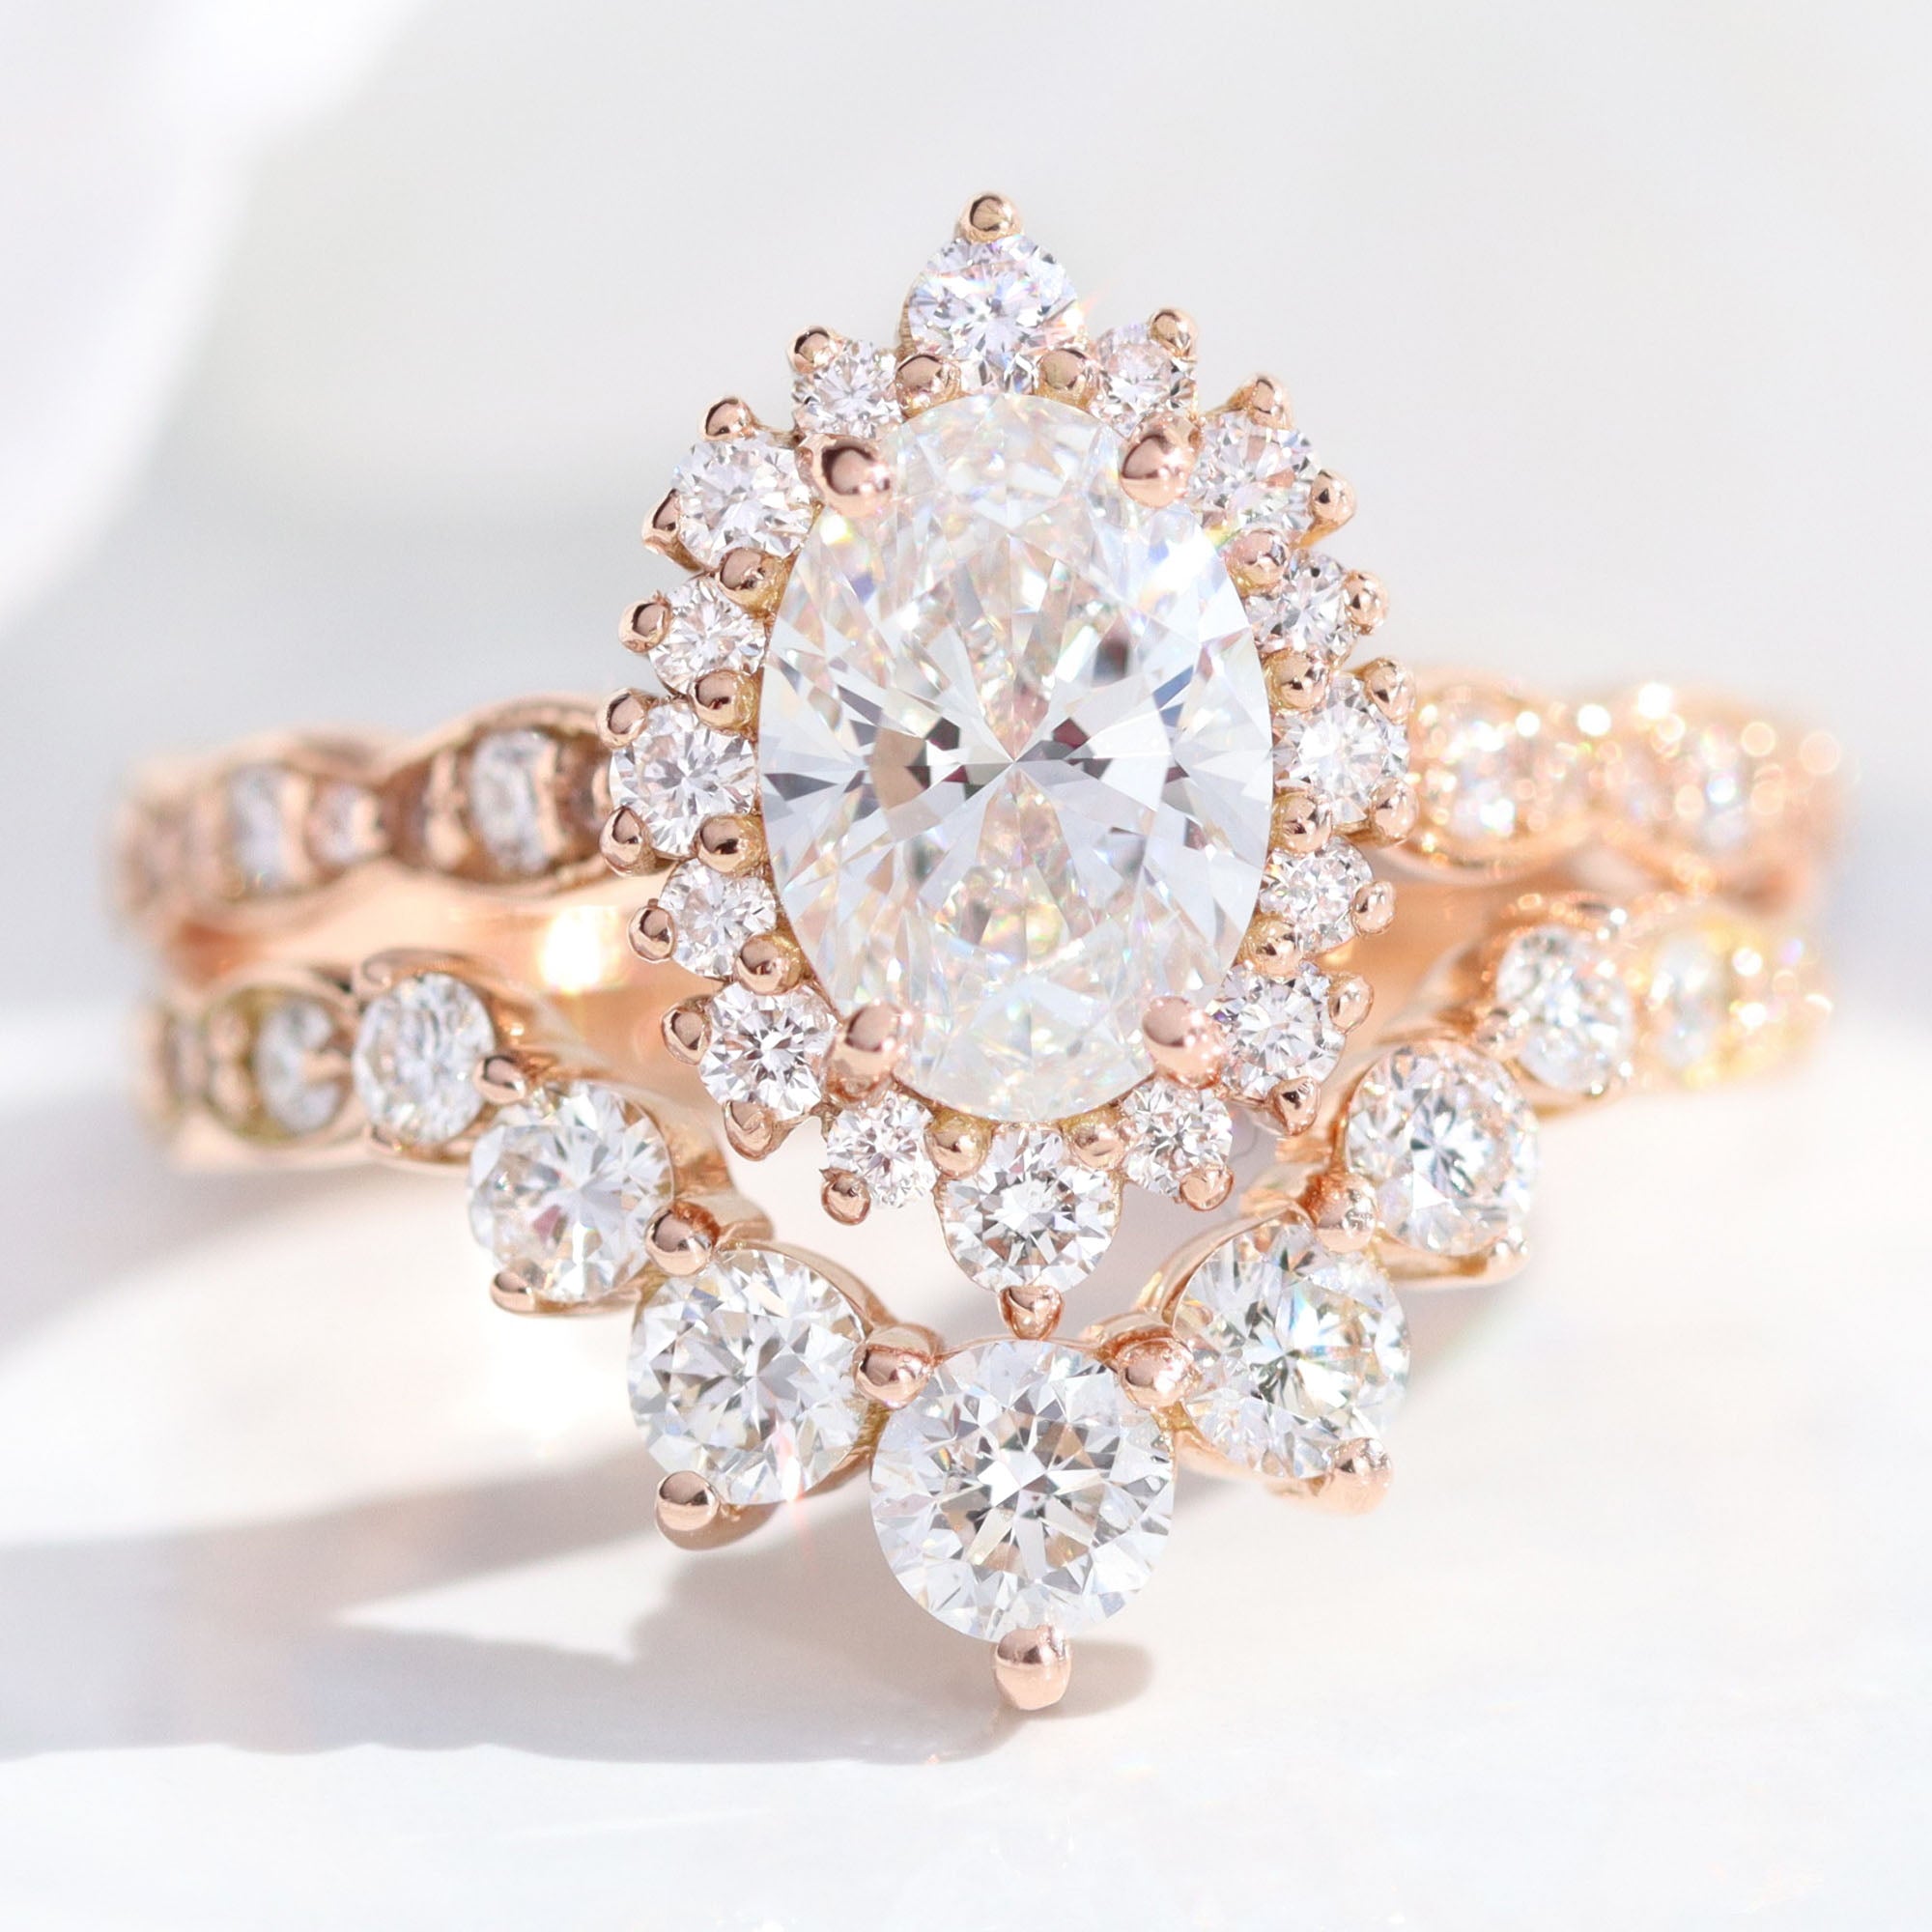 lab diamond ring stack rose gold oval diamond halo engagement ring set La More Design Jewelry